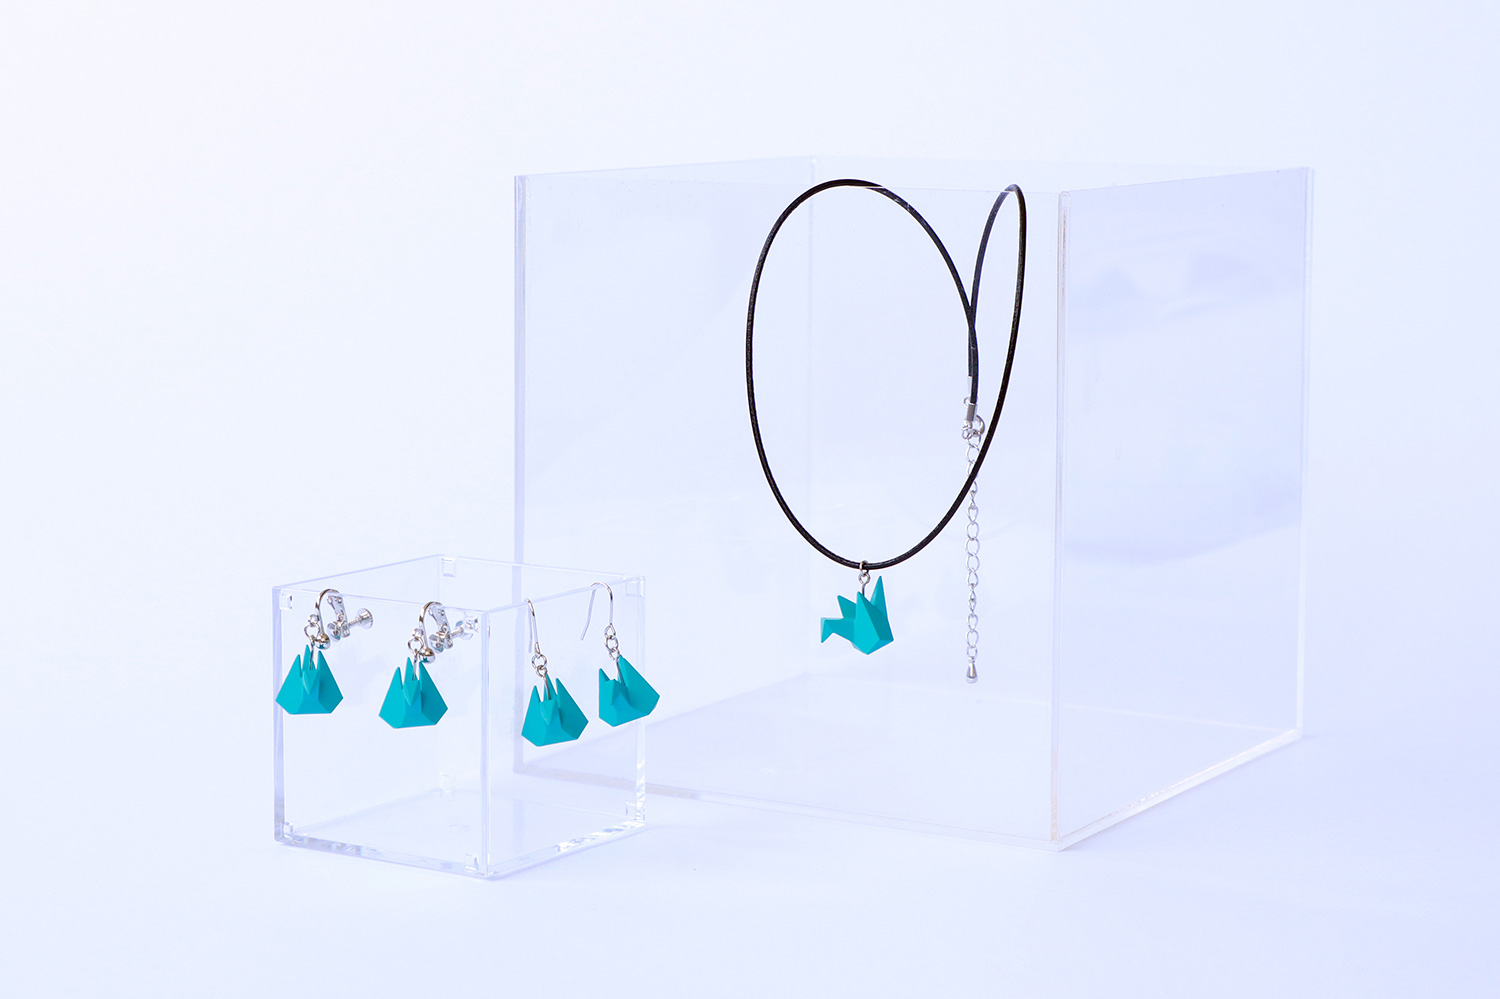 Prize: Orizuru charm accessory set